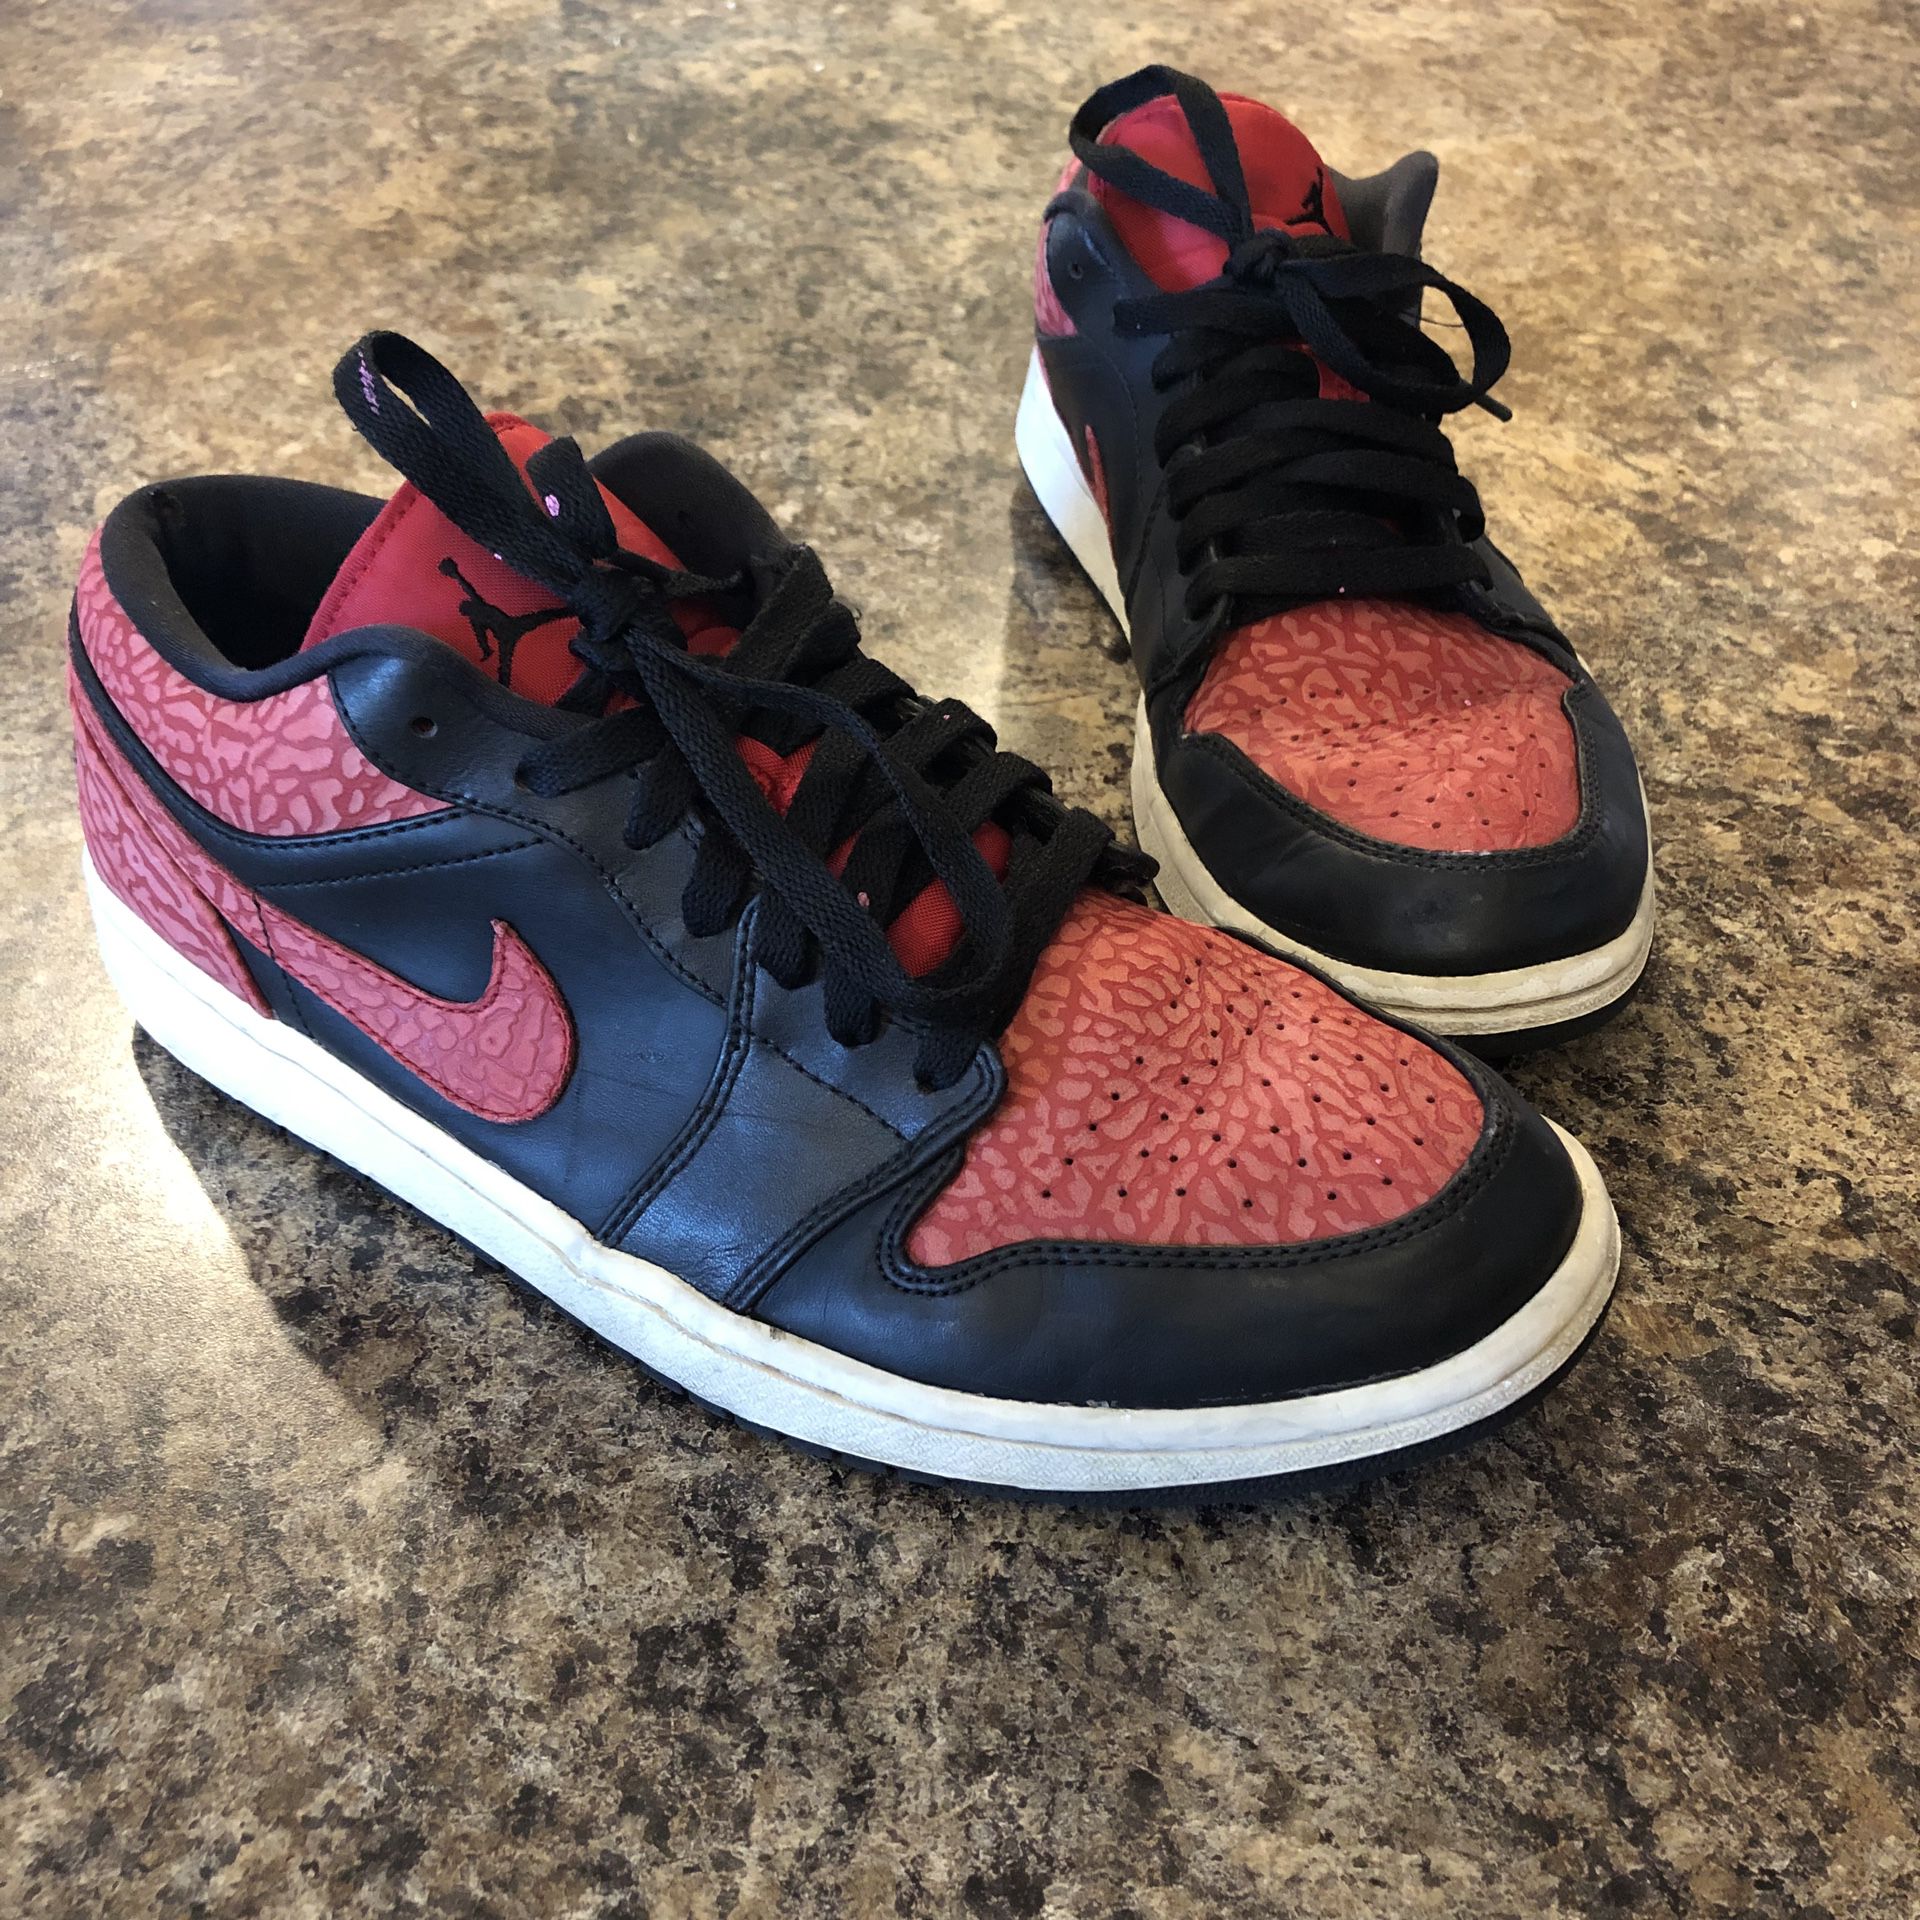 Air Jordan 1’s (Size 11)